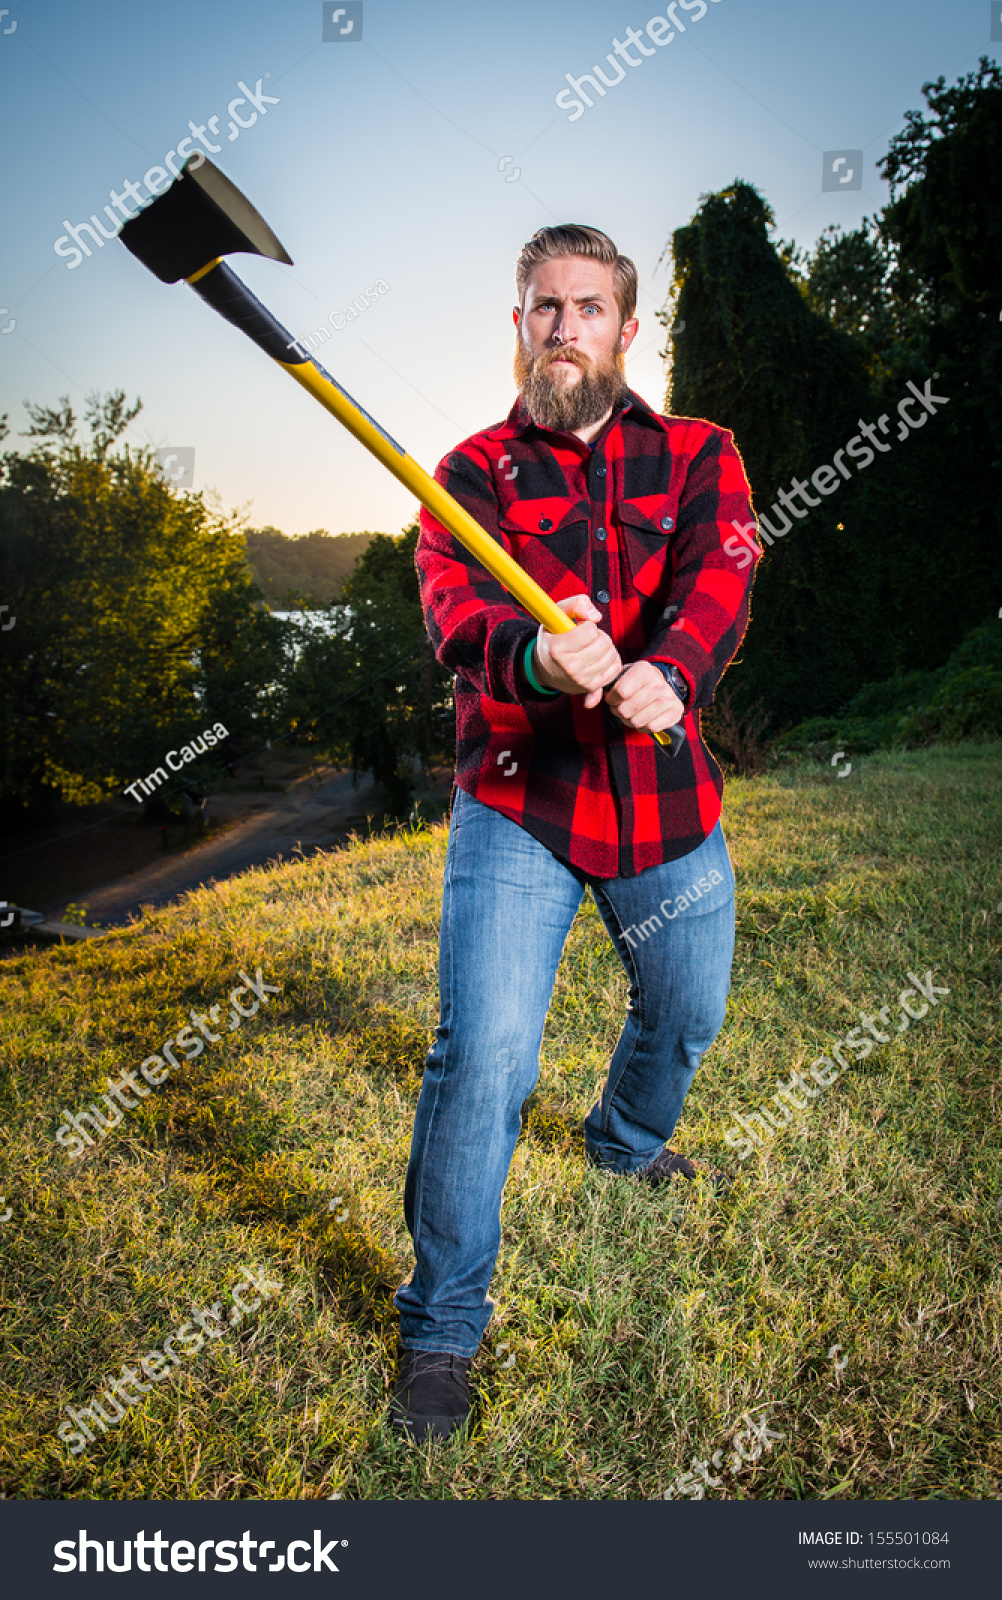 Urban Lumberjack Attack Stock Photo 155501084 - Shutterstock